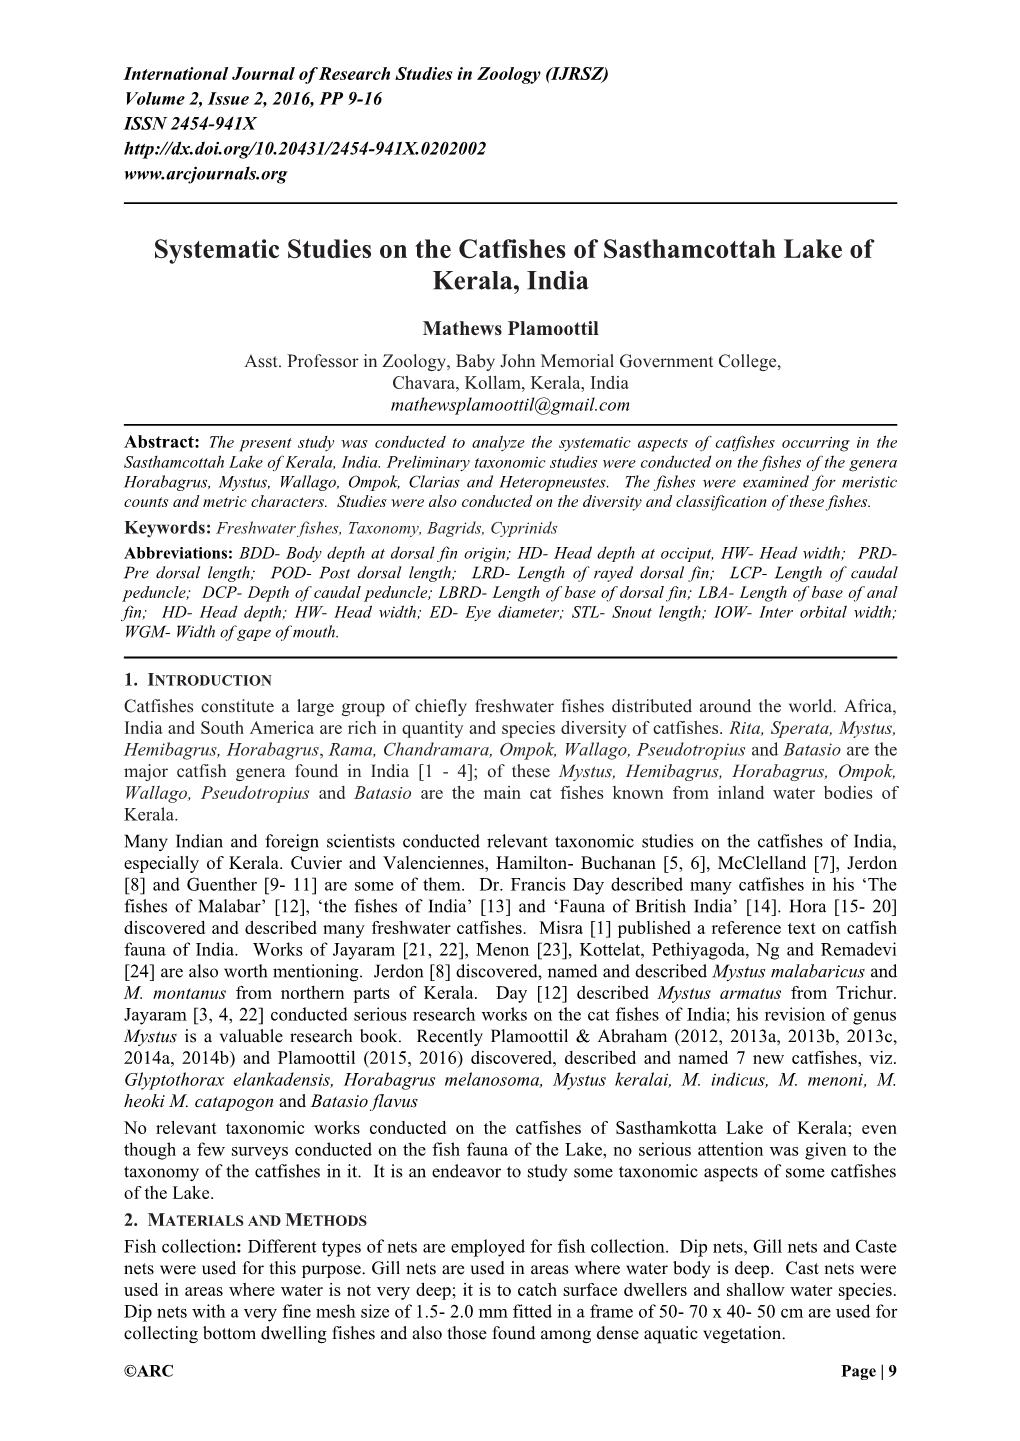 Systematic Studies on the Catfishes of Sasthamcottah Lake of Kerala, India